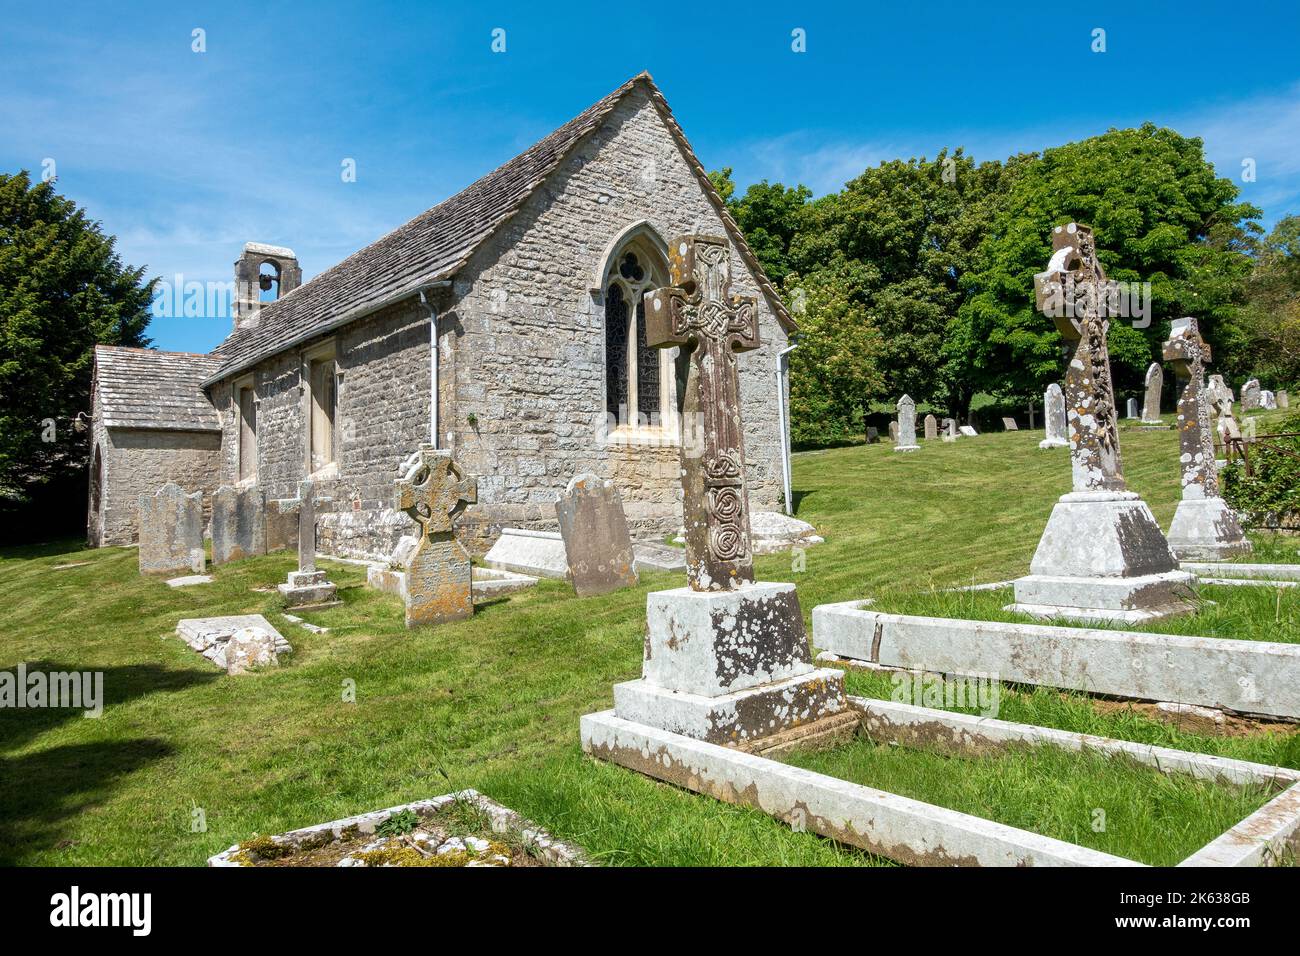 The St Nicholas of Myra village church in Kimmeridge, Isle of Purbeck, Dorset, England, UK Stock Photo